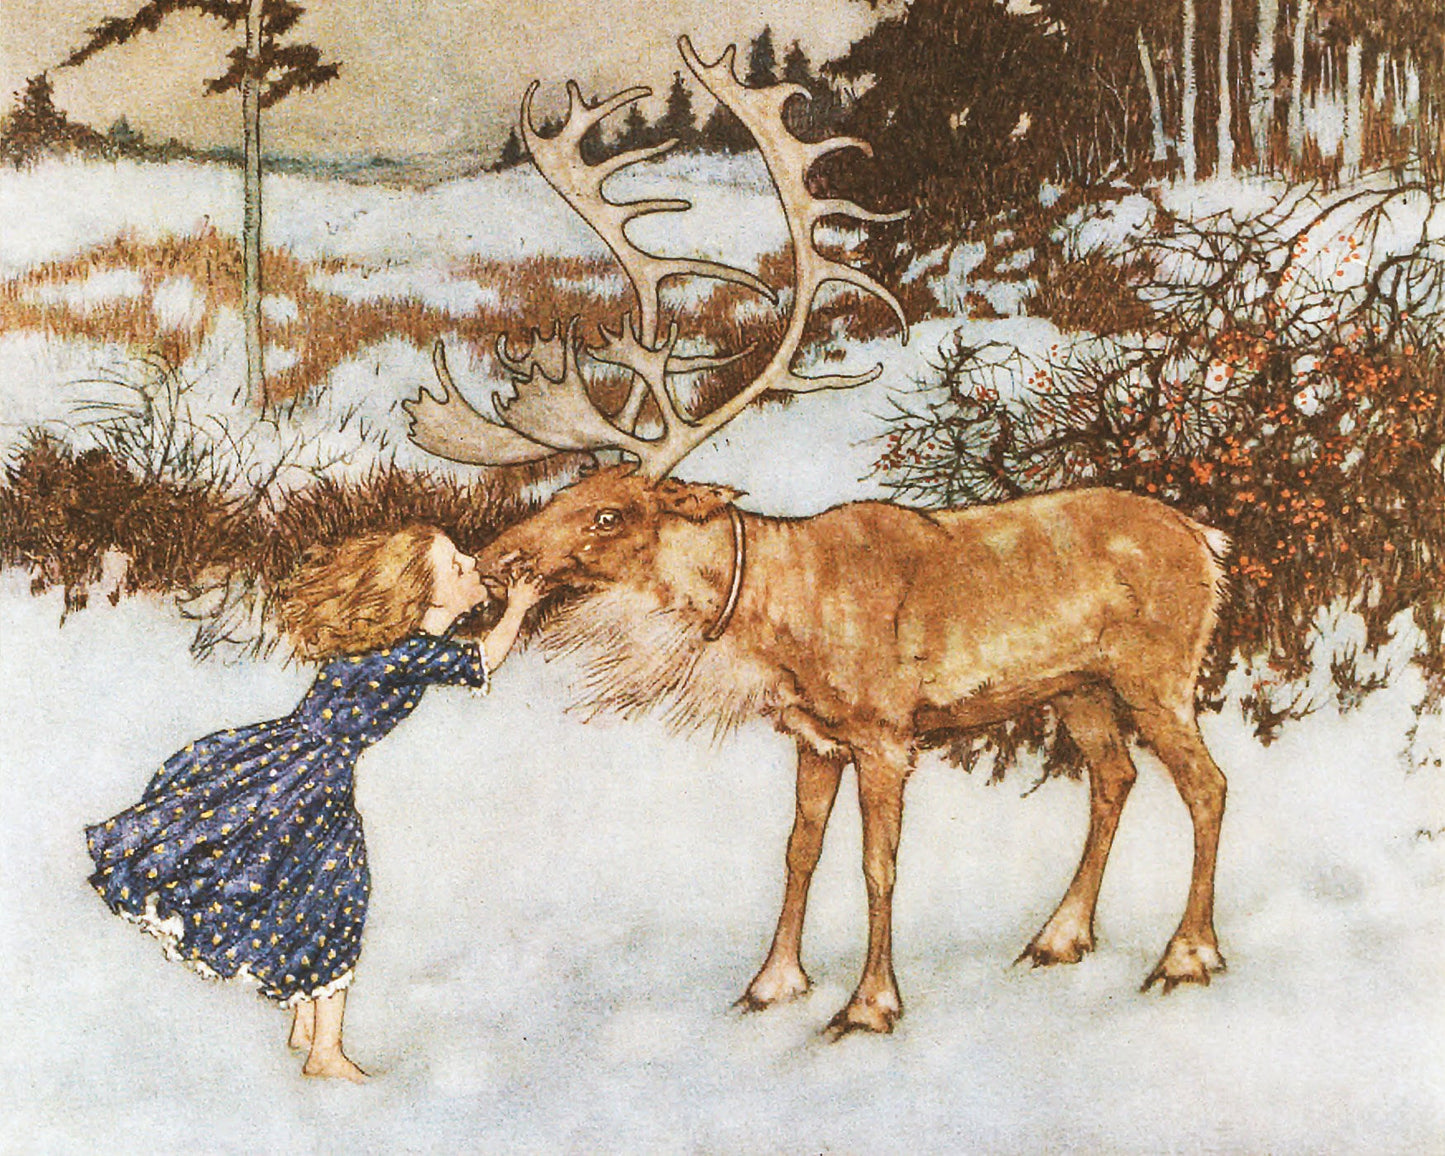 Sweet girl kissing a reindeer | Gerda and the Reindeer | Christmas woodland | Edmund Dulac book illustration | Fantasy wall art